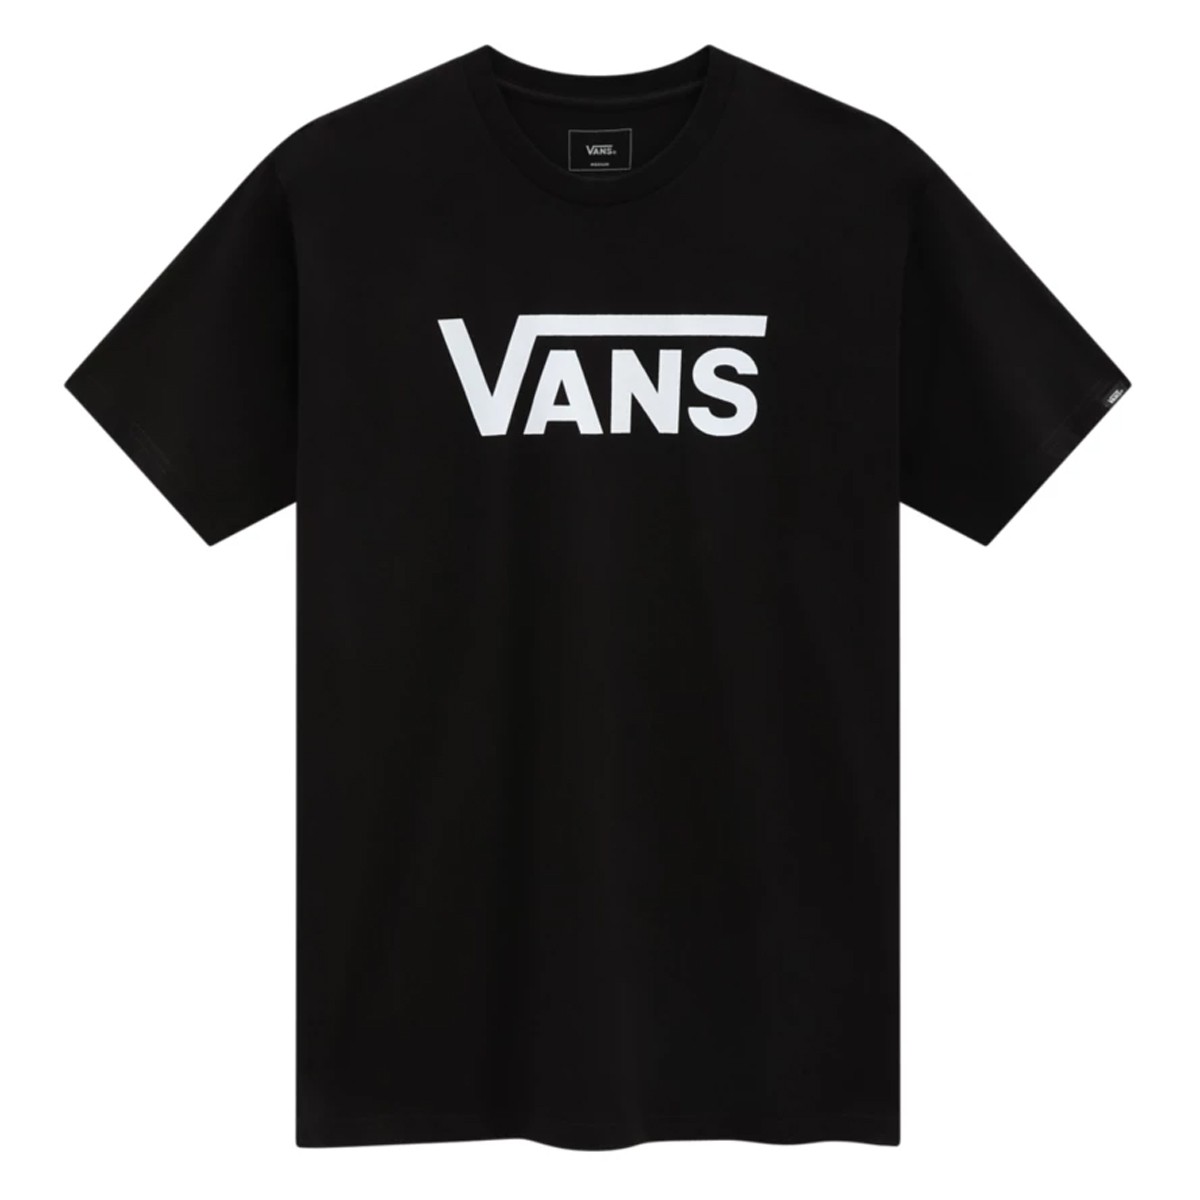 Vans Classic Black/White T-Shirt VN000GGGY281